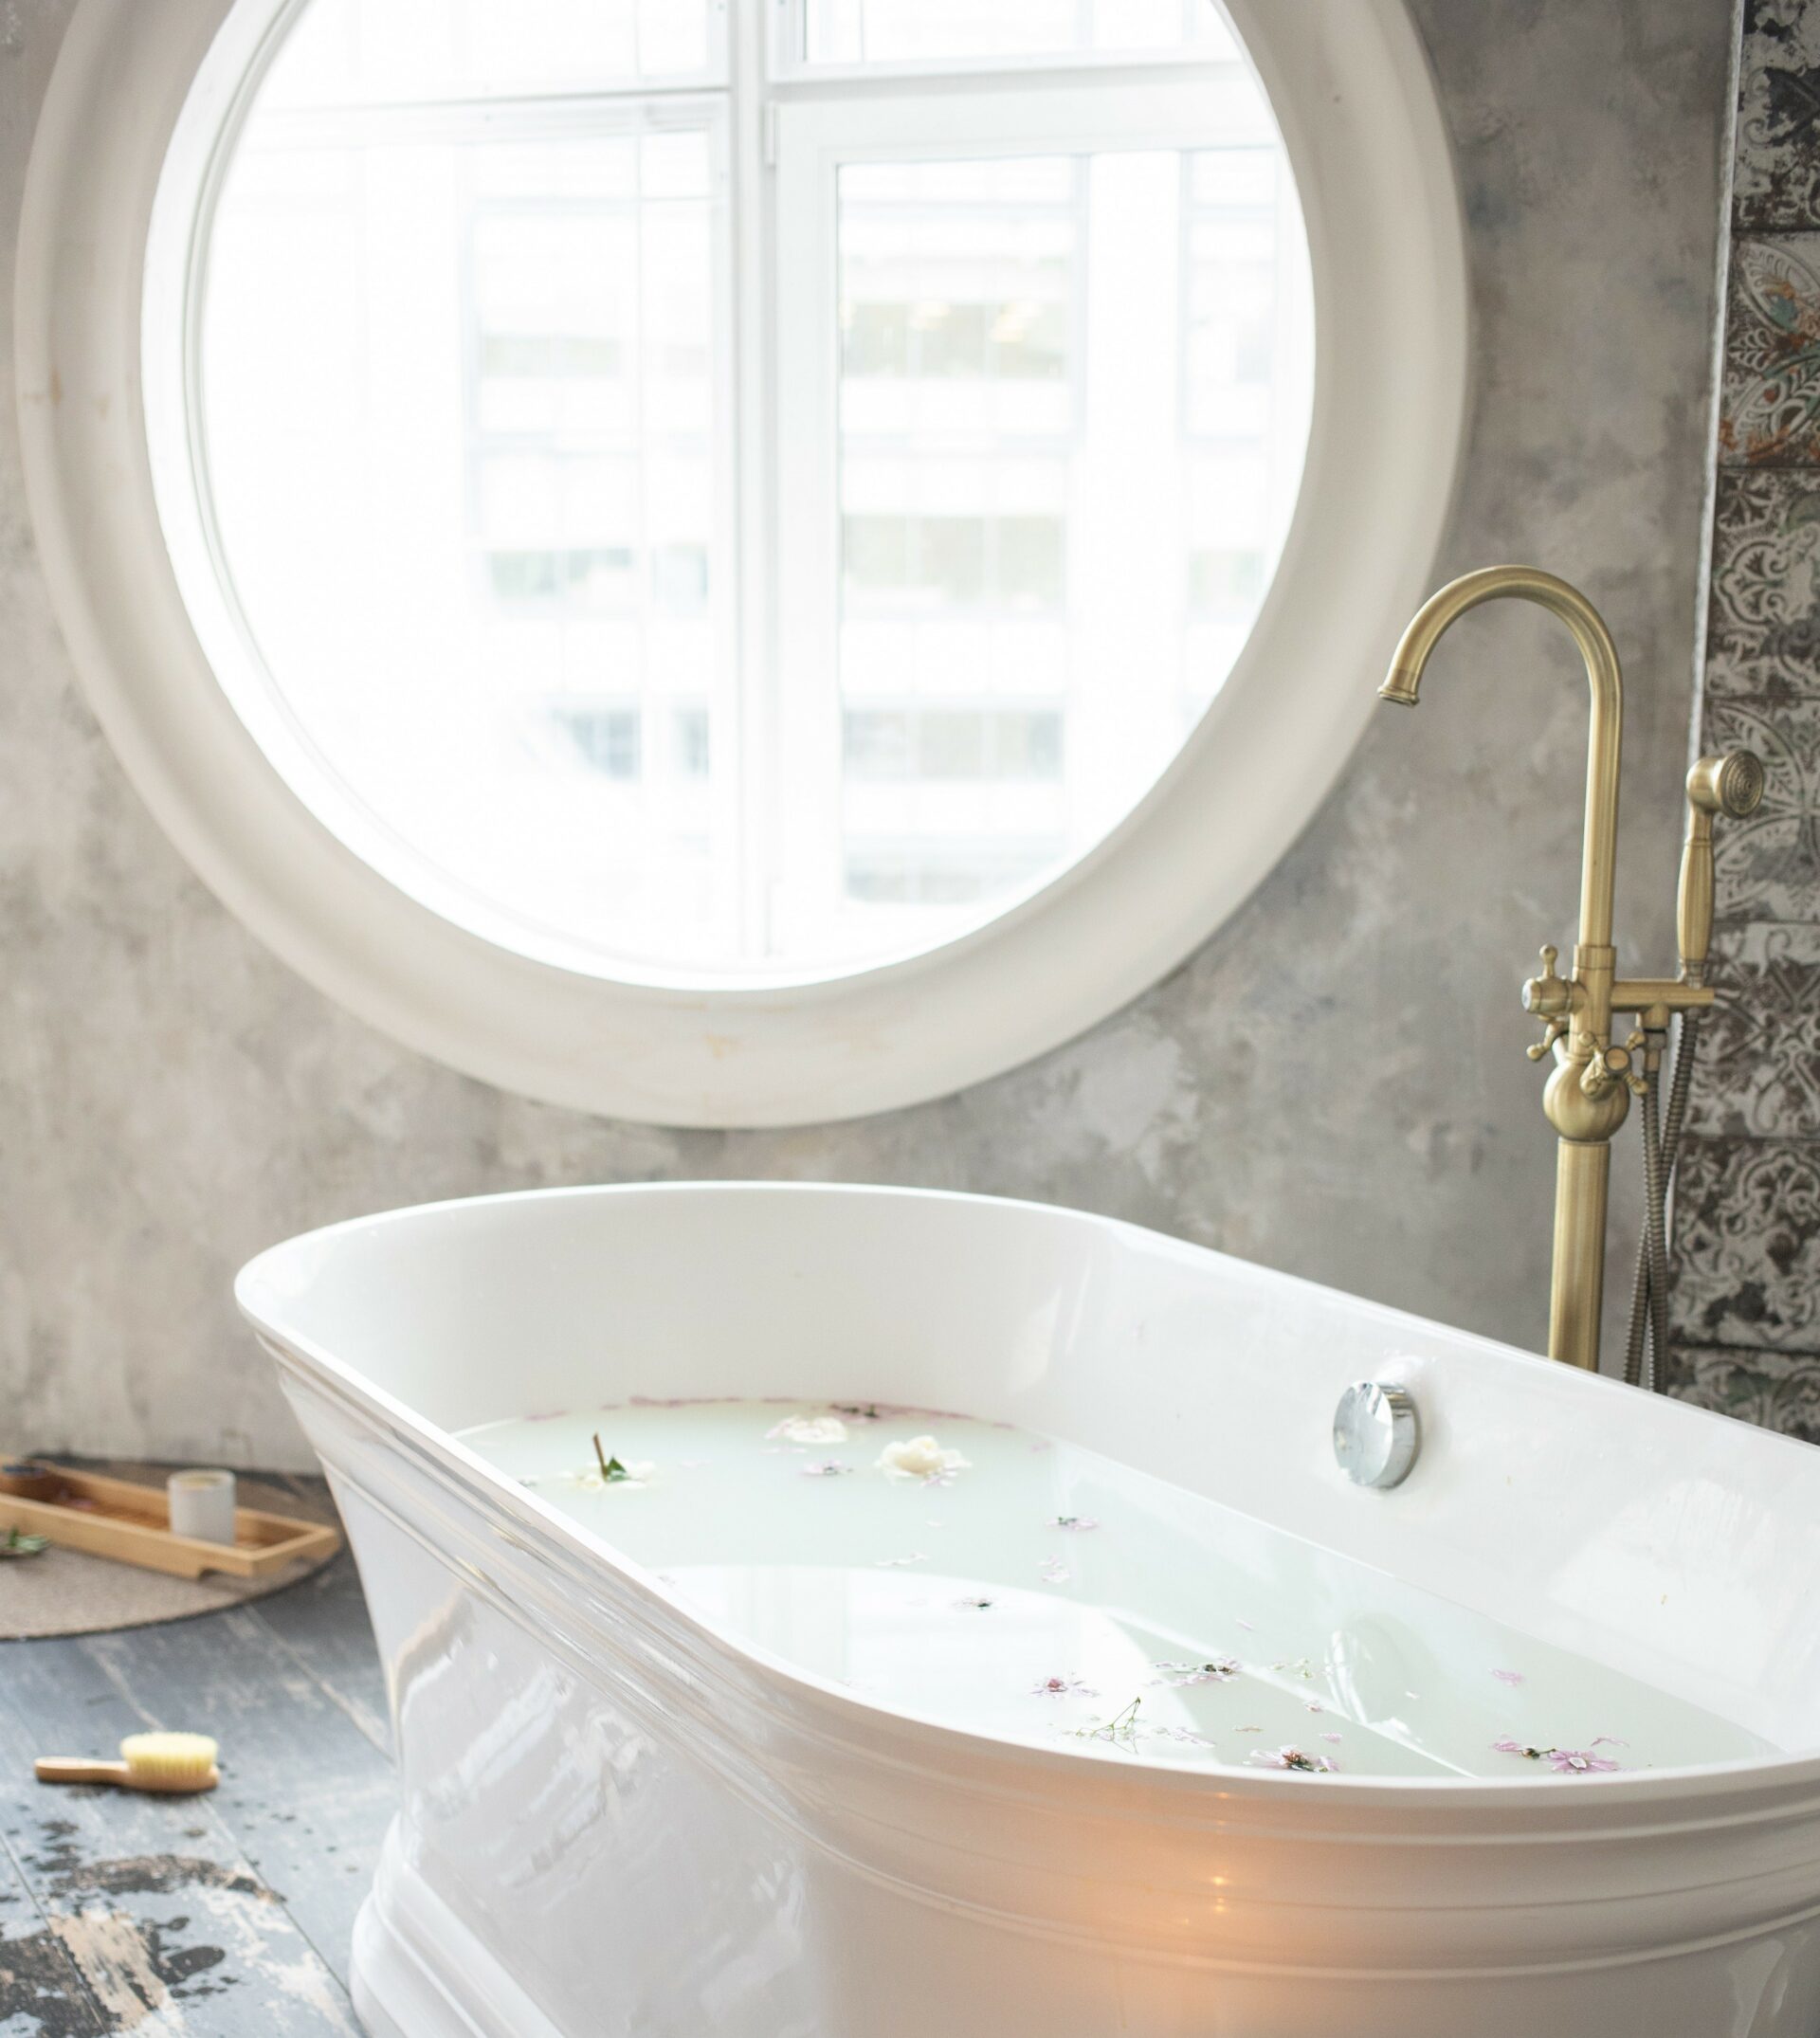 Filled bath tub with botanicals - Young Living Lavender Life blog 